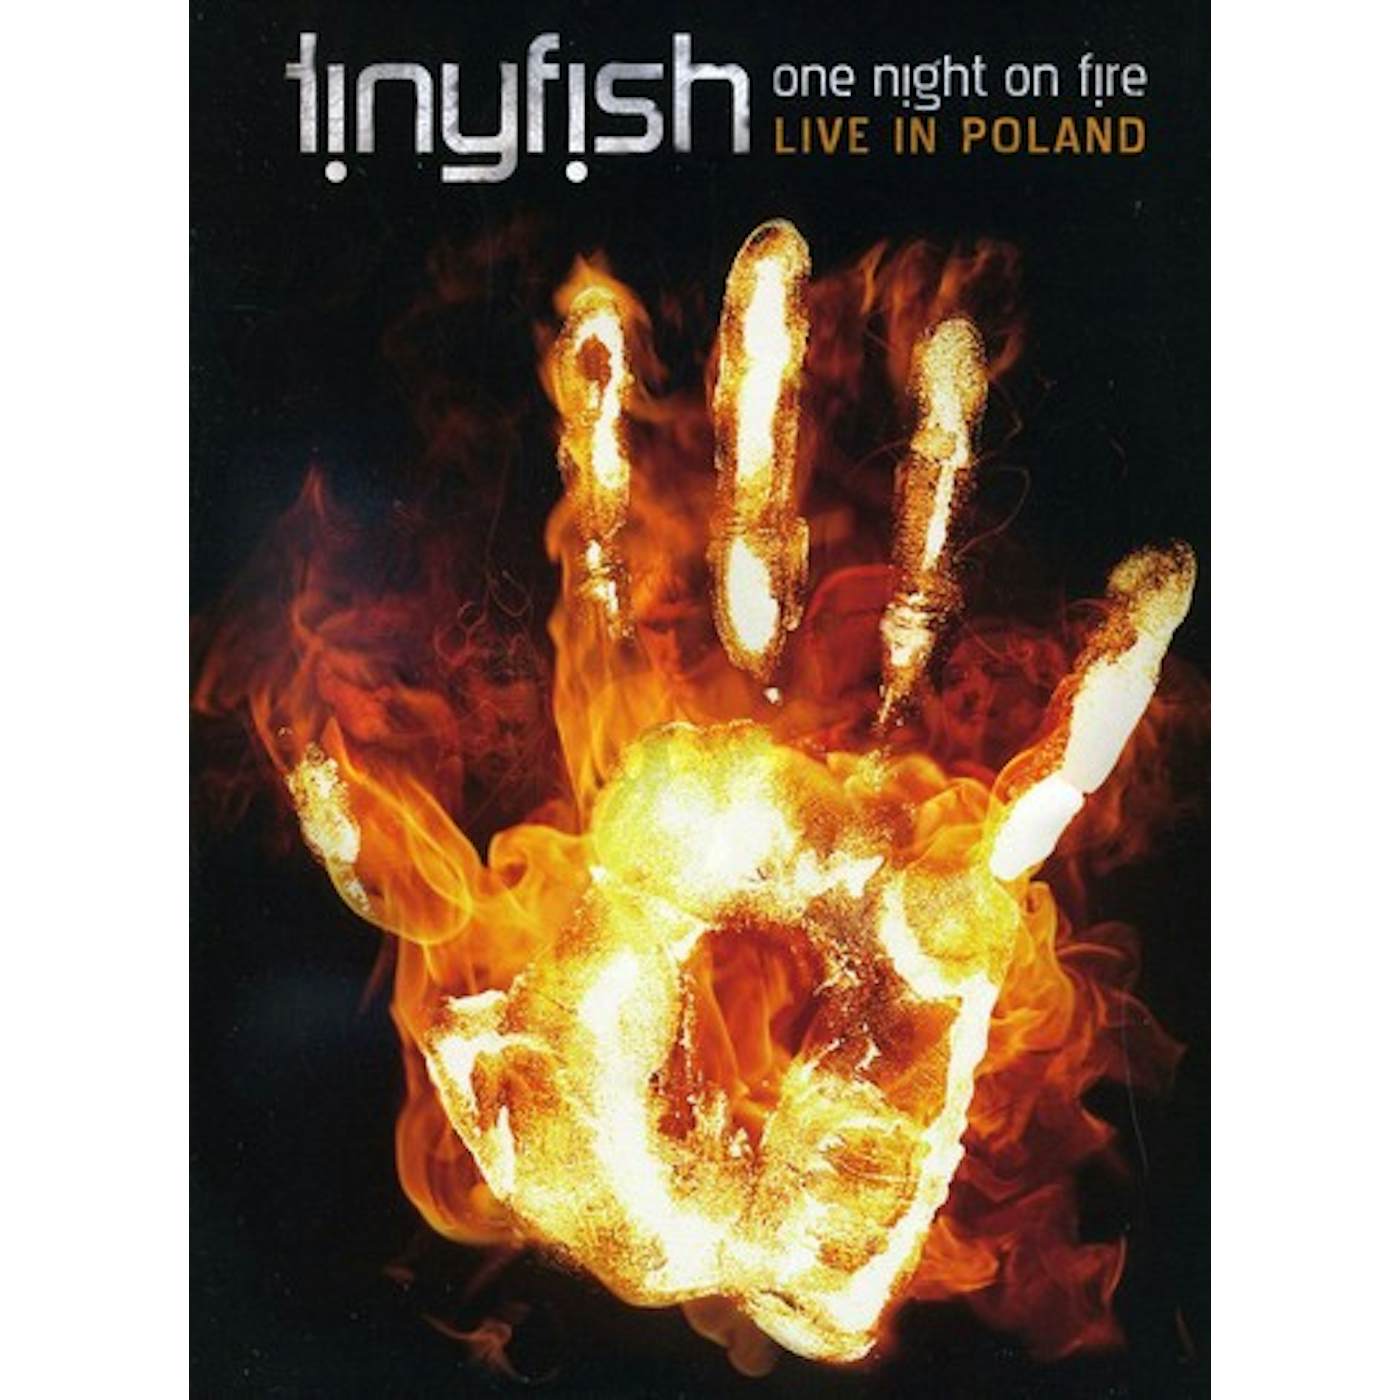 Tinyfish ONE NIGHT ON FIRE DVD